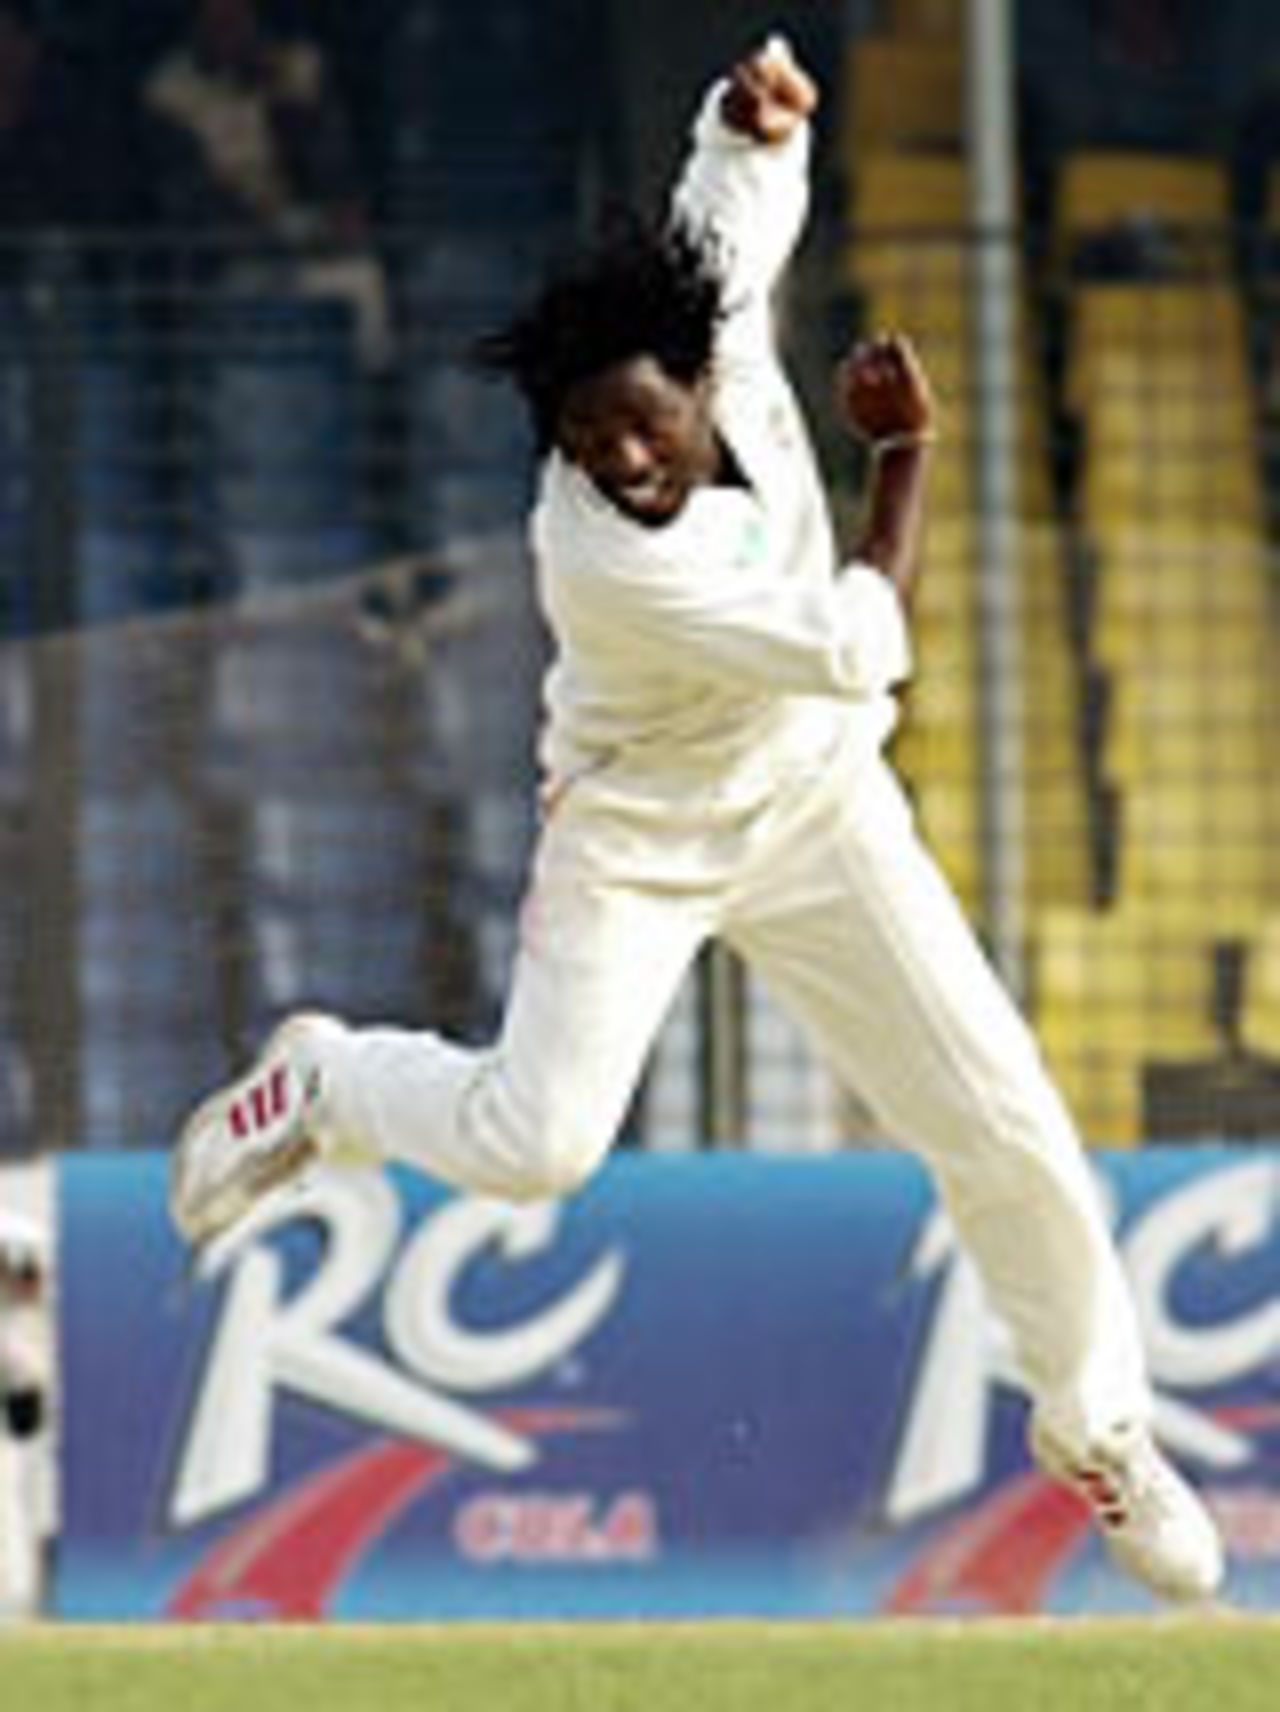 Douglas Hondo in his follow-through, Bangladesh v Zimbabwe, 2nd Test, Dhaka, 2nd day, January 15, 2005